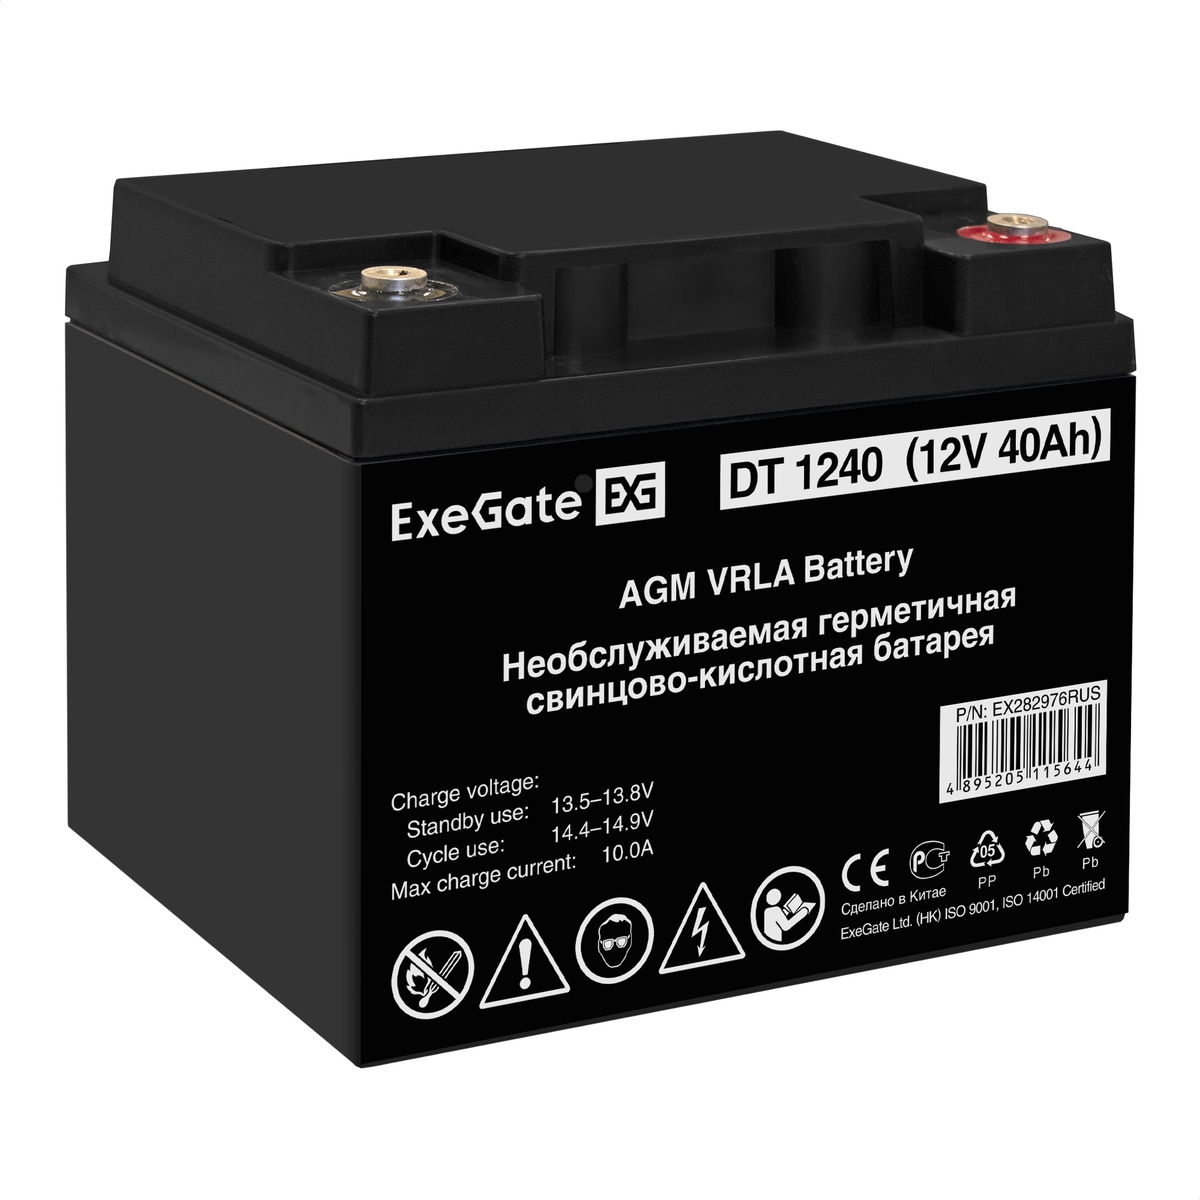 UPS set EX295995 + battery 40Ah EX282976 1 piece